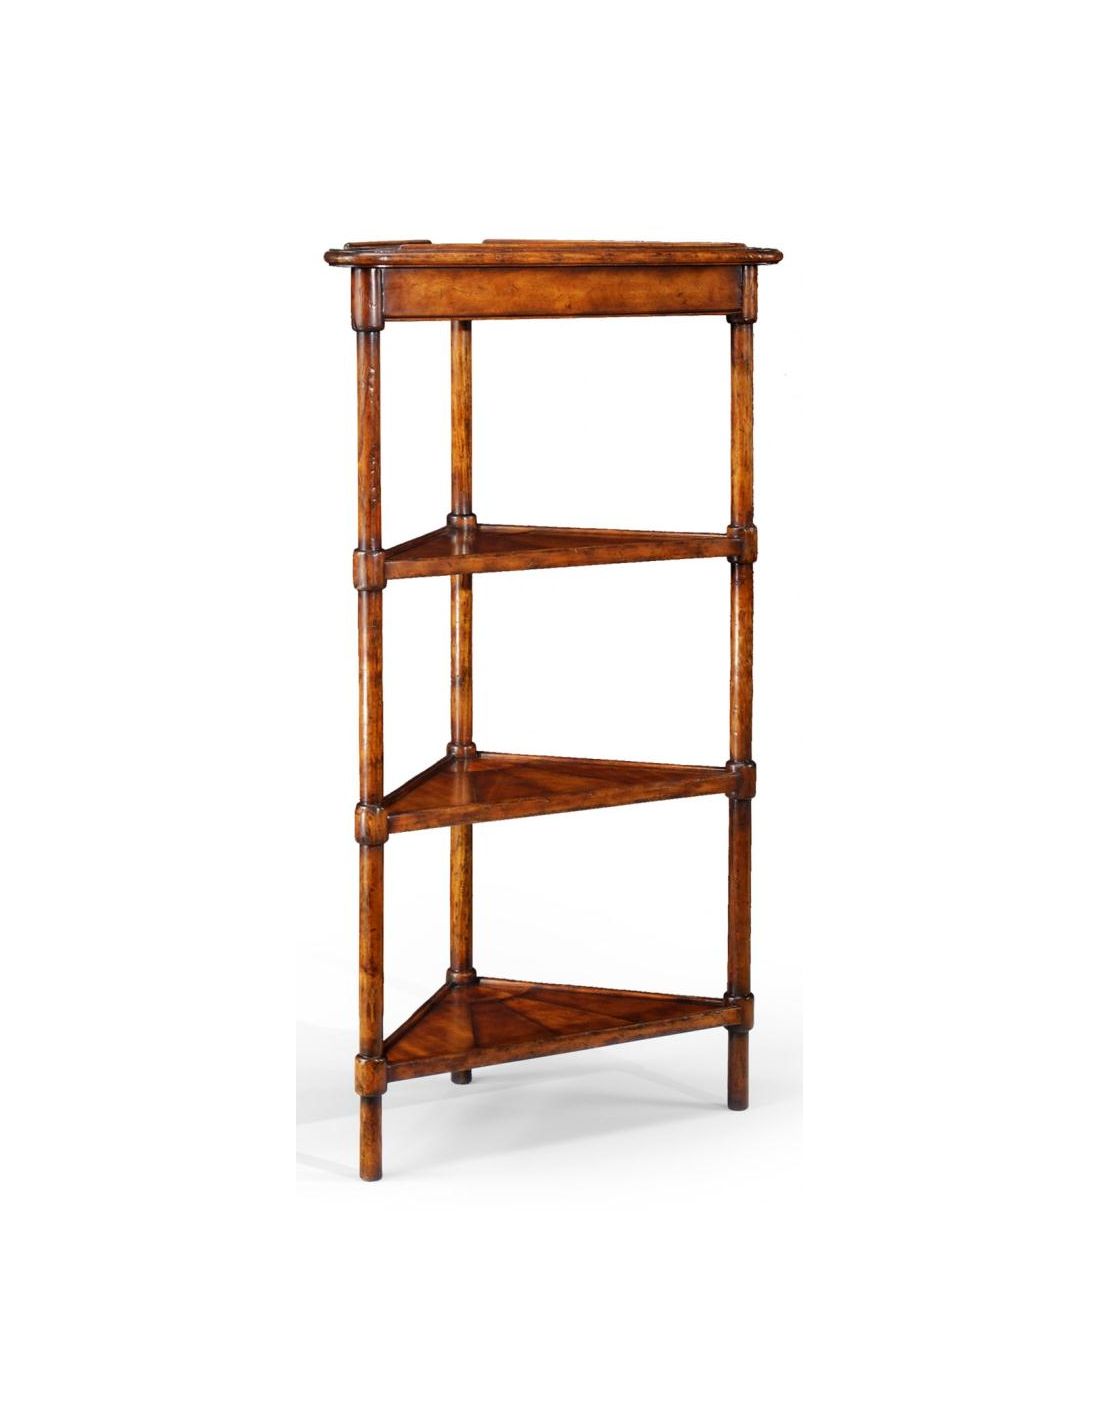 English victorian turned leg three shelf small wooden etagere display shelf